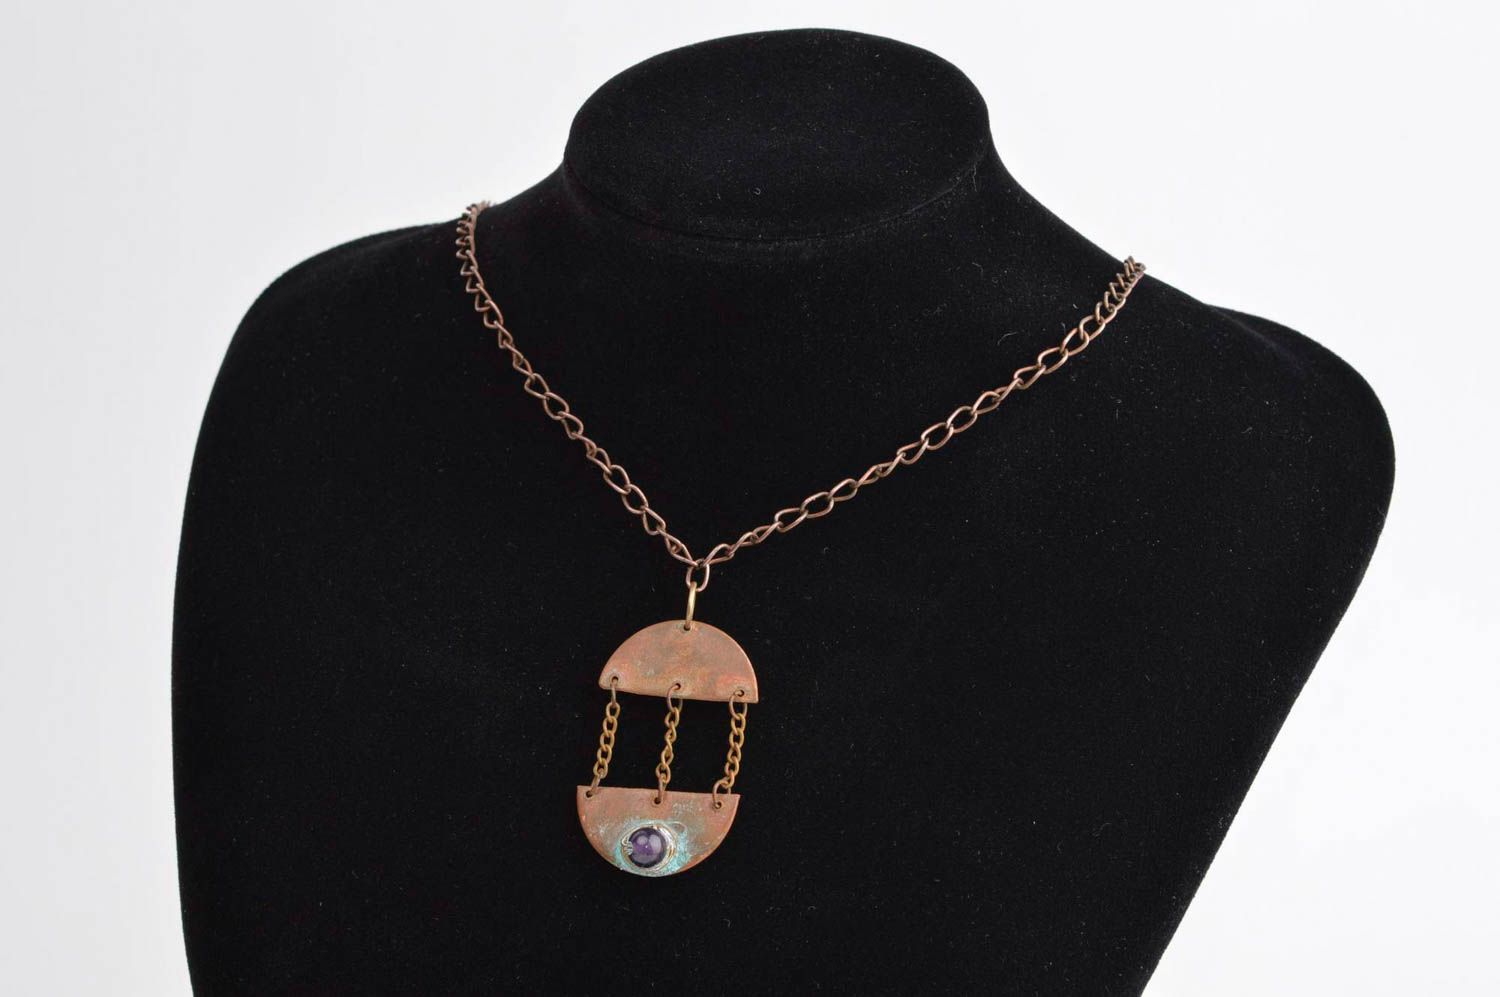 Handmade pendant designer jewelry unusual neck accessory copper pendant photo 1